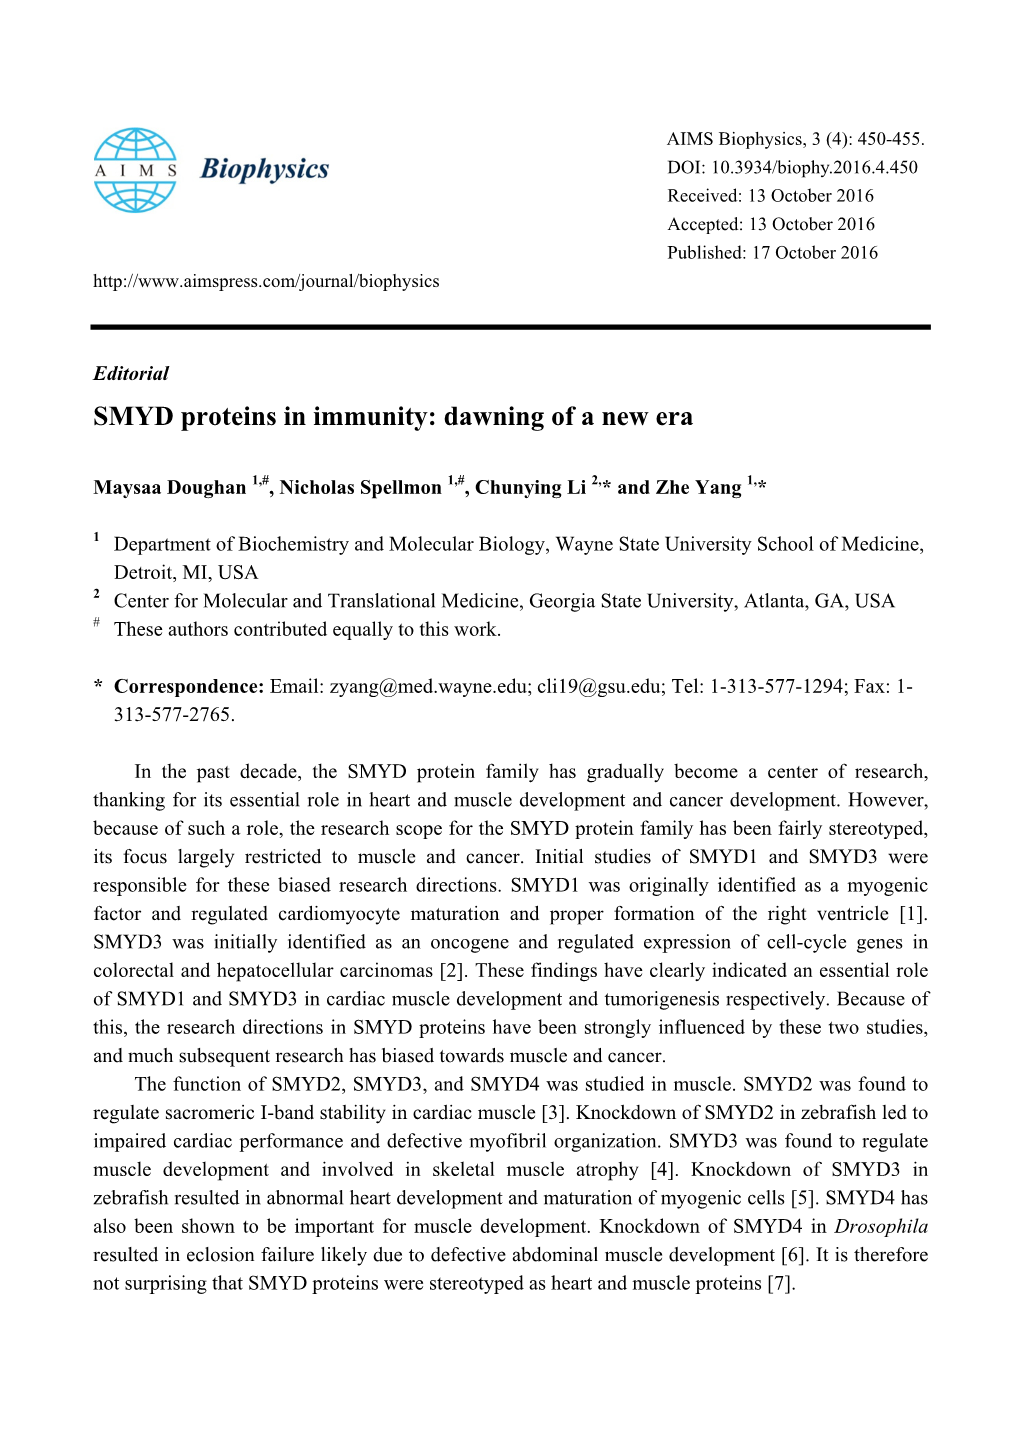 SMYD Proteins in Immunity: Dawning of a New Era